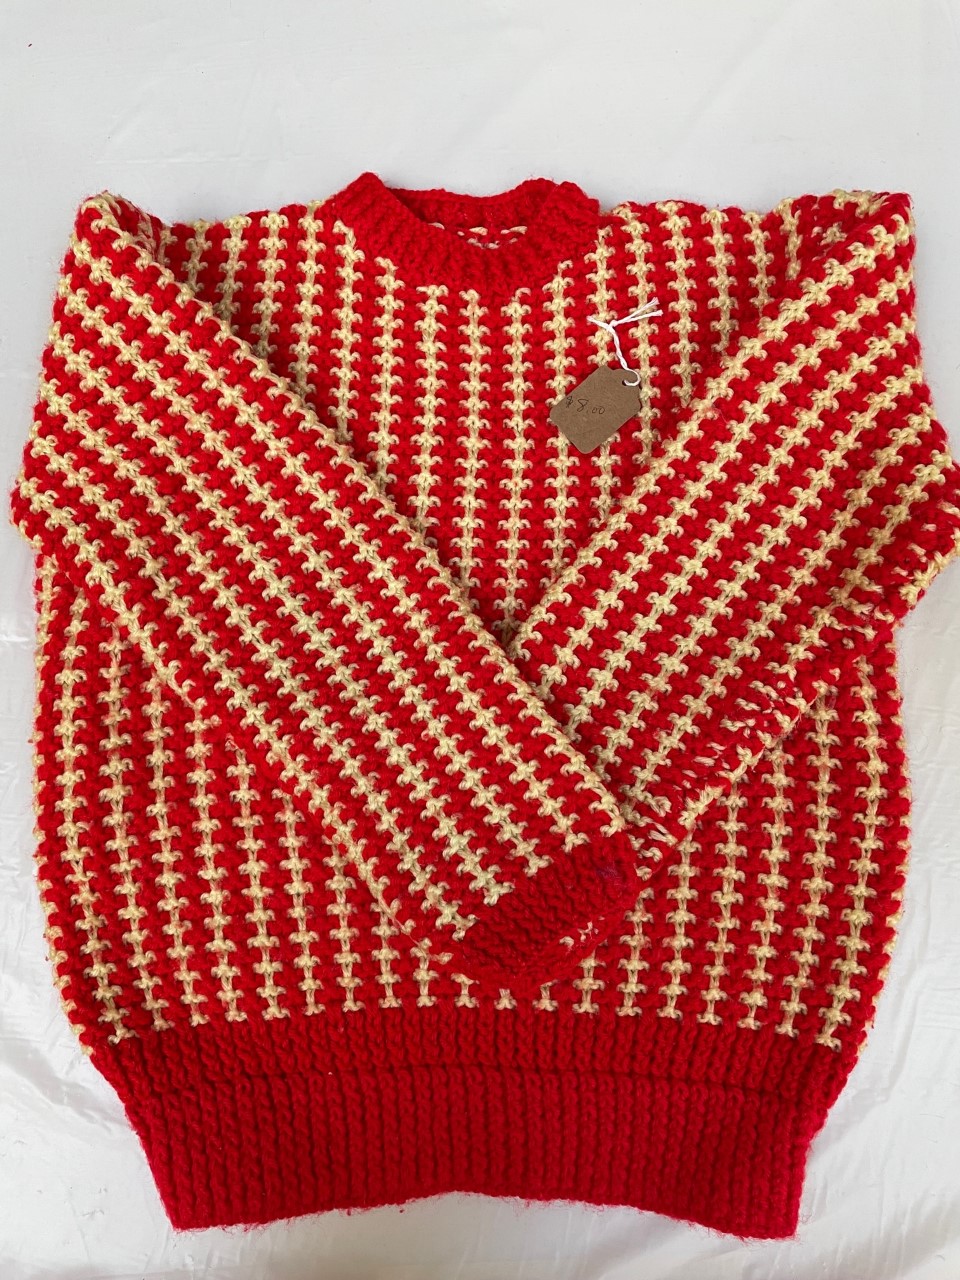 Child's sweater